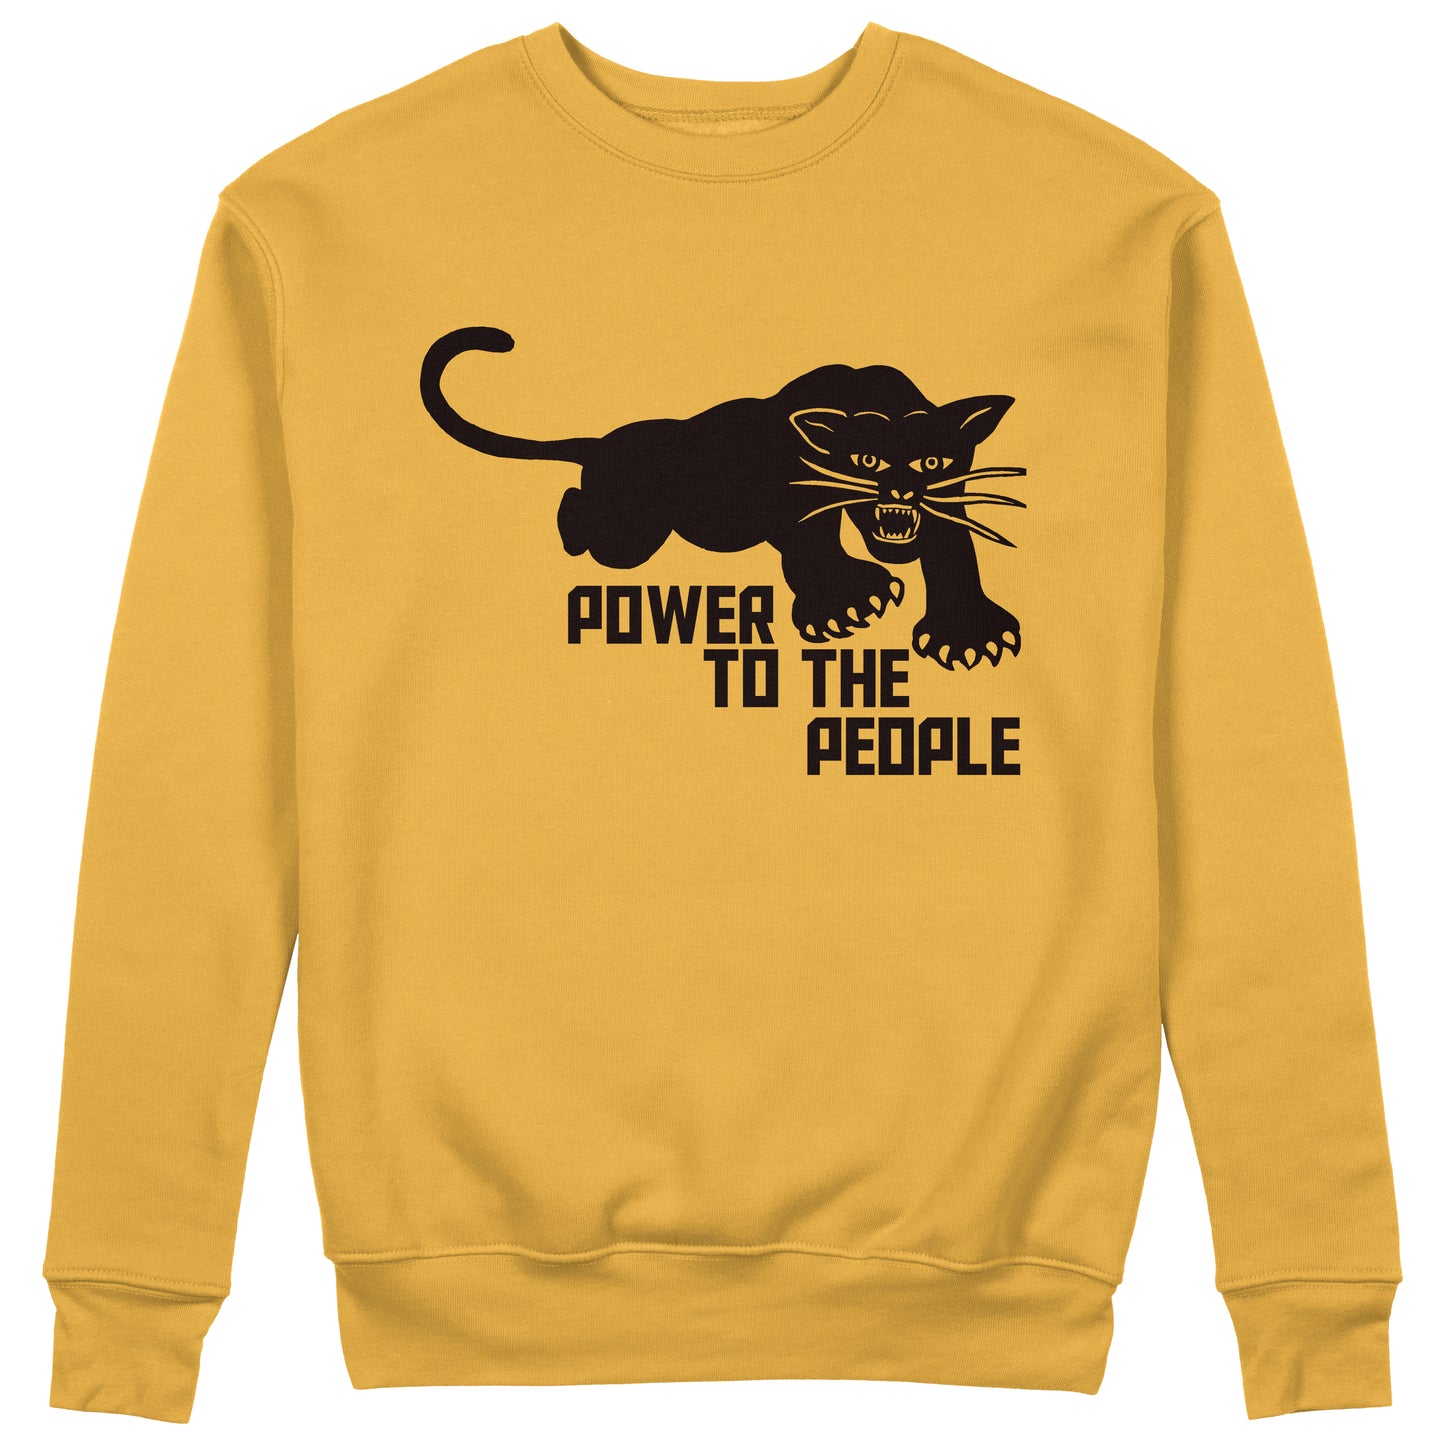 CUC Felpa Power to the People - Black Panter #chooseurcolor - CUC chooseurcolor